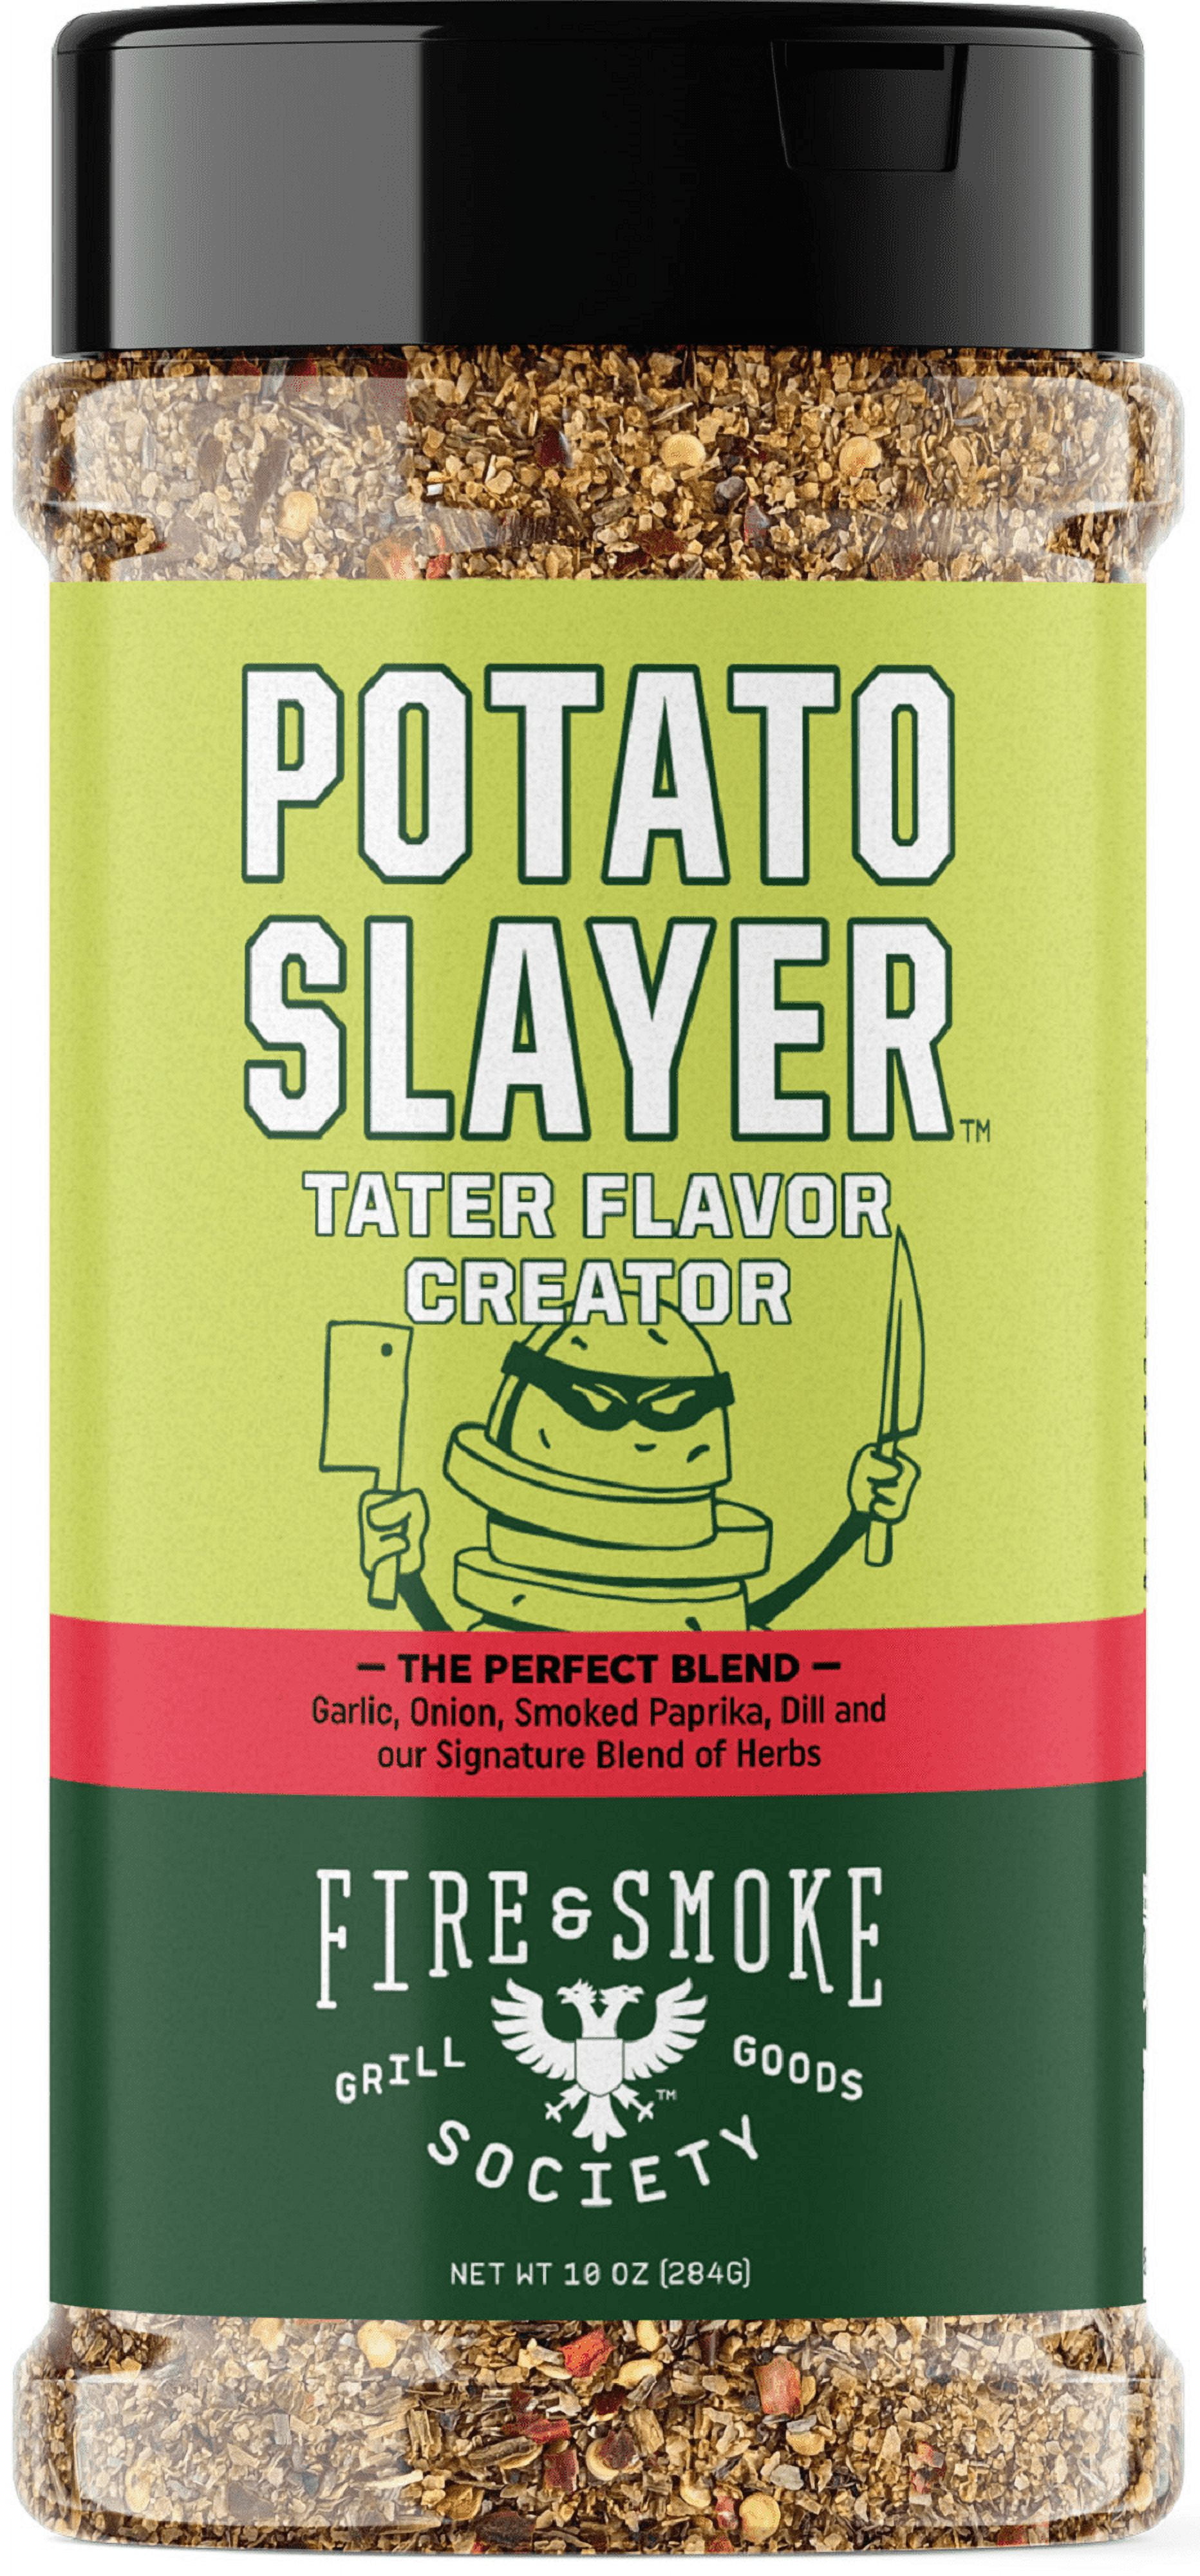 Fire & Smoke Society Potato Slayer Vegetable Spice Blend, 10 Ounce